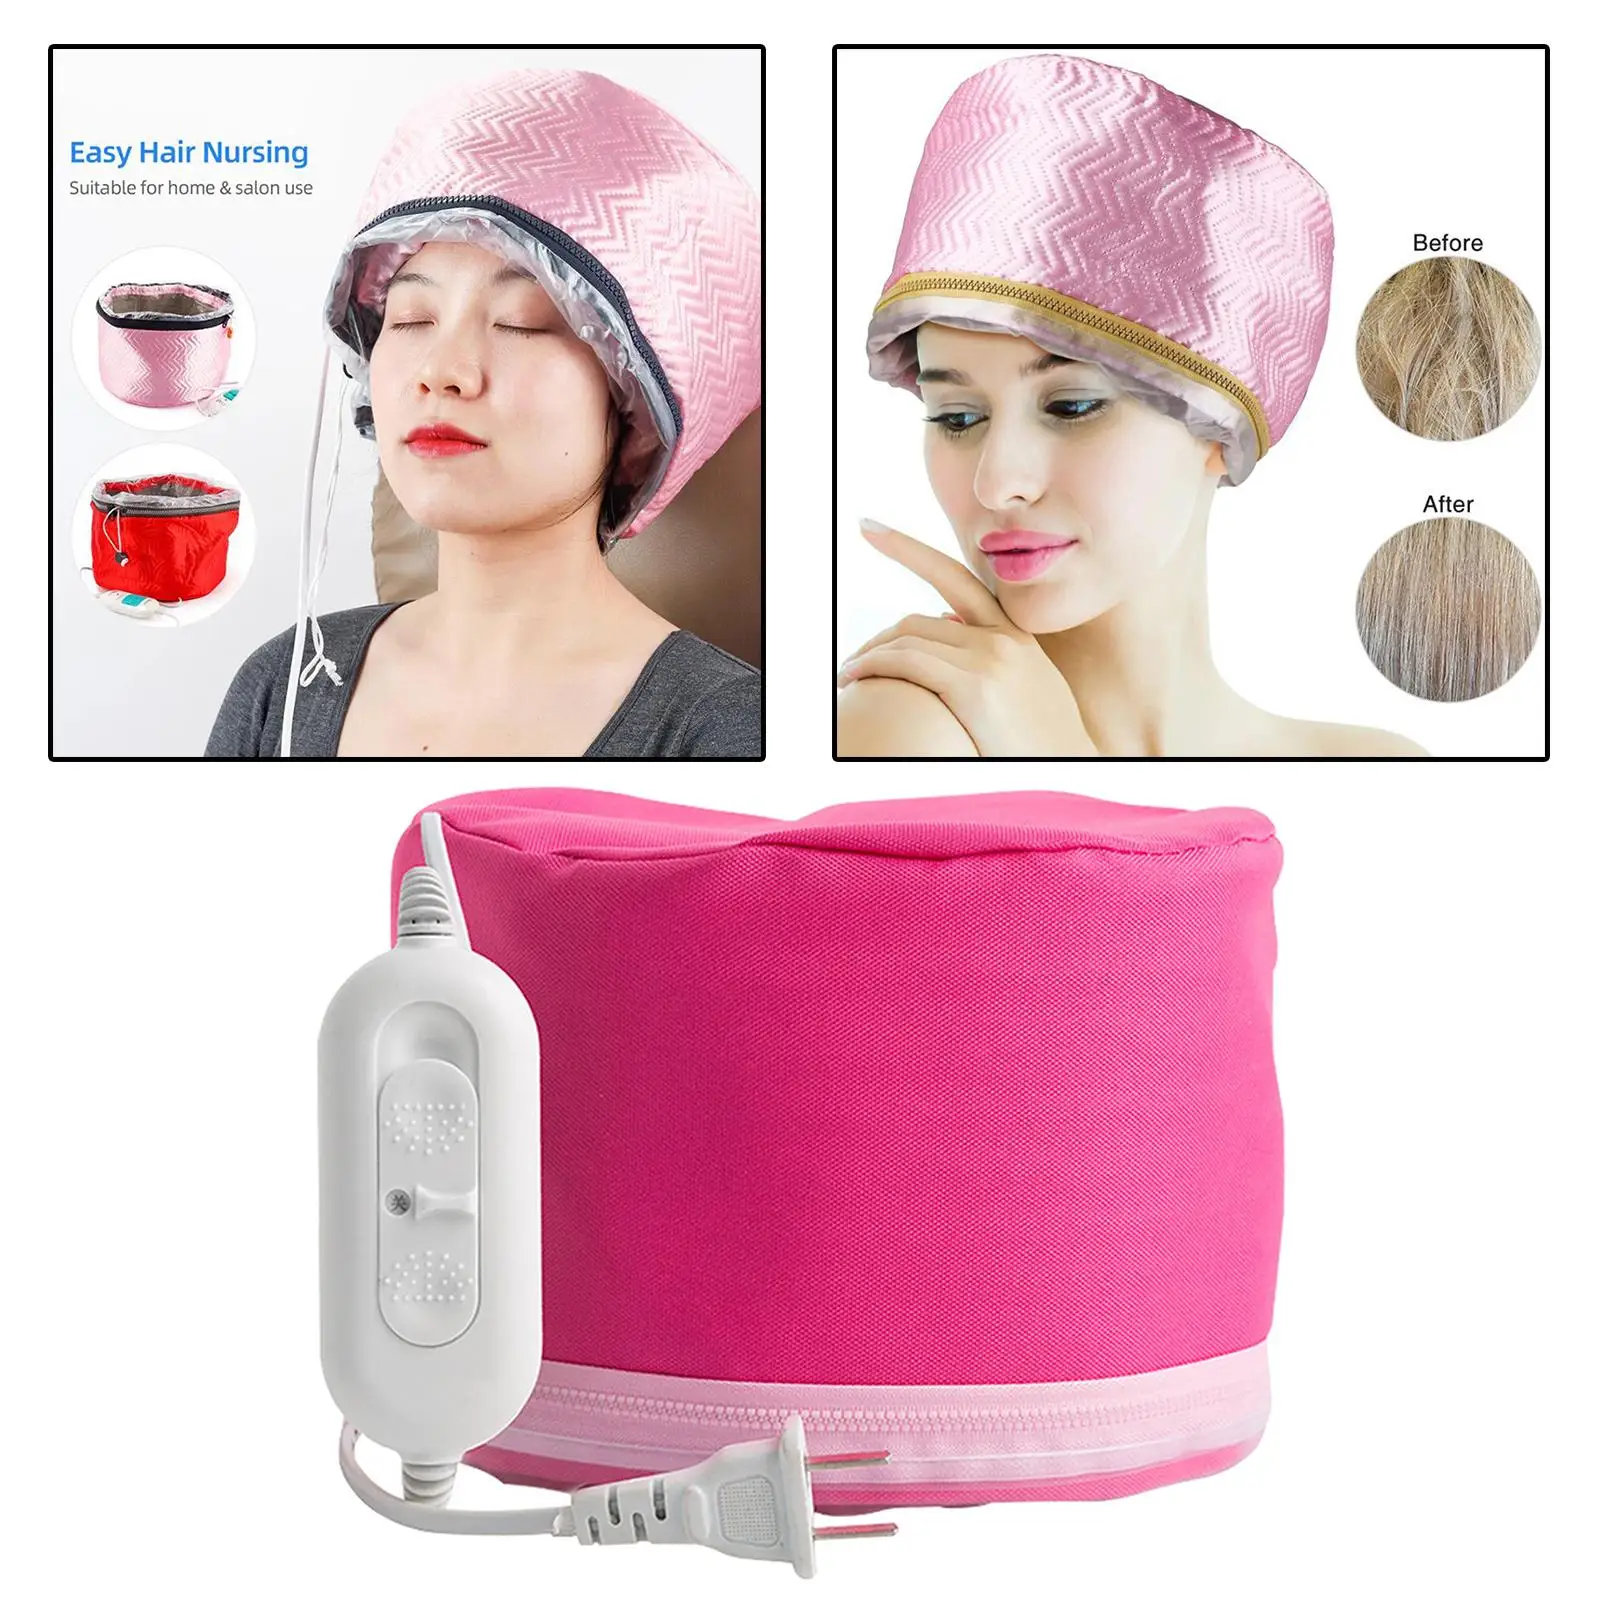 Hair Heating Caps Steamer 3-Mode Adjustable Household Safe Hair Steamer for Deep Conditioning Home Salon Drying Travel Women Men